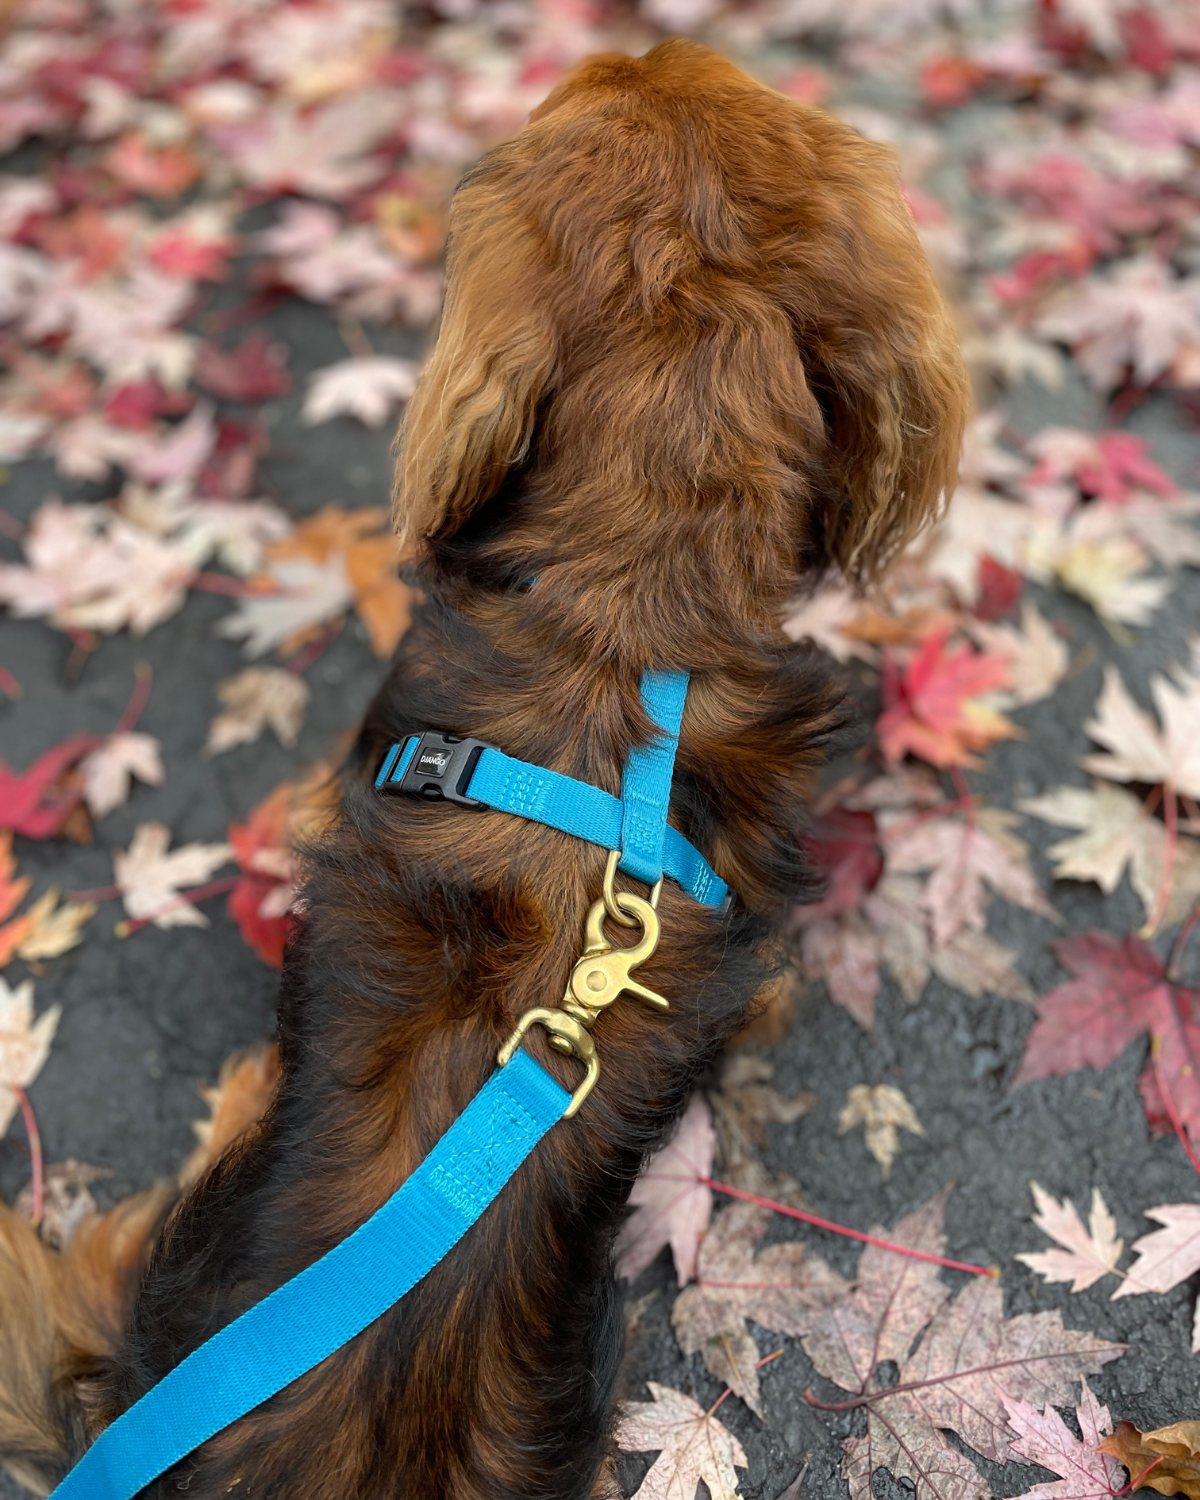 DJANGO - Pair your Pacific Blue Adventure Dog Harness with your Pacific Blue DJANGO dog leash - djangobrand.com